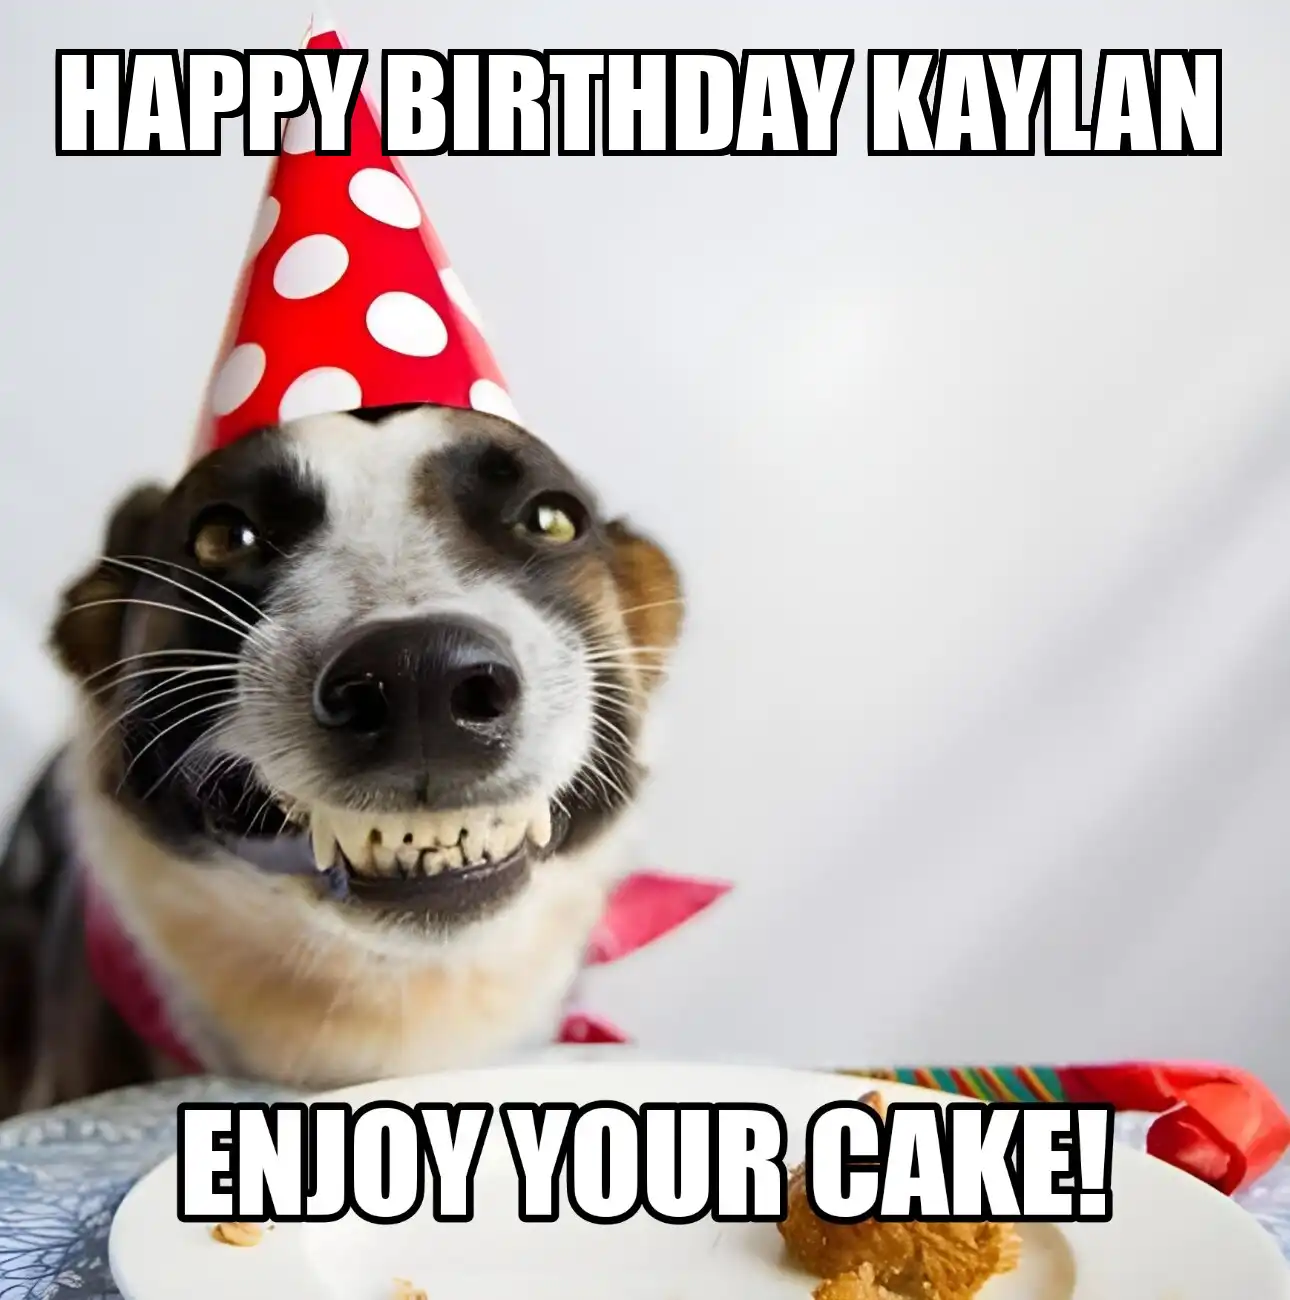 Happy Birthday Kaylan Enjoy Your Cake Dog Meme